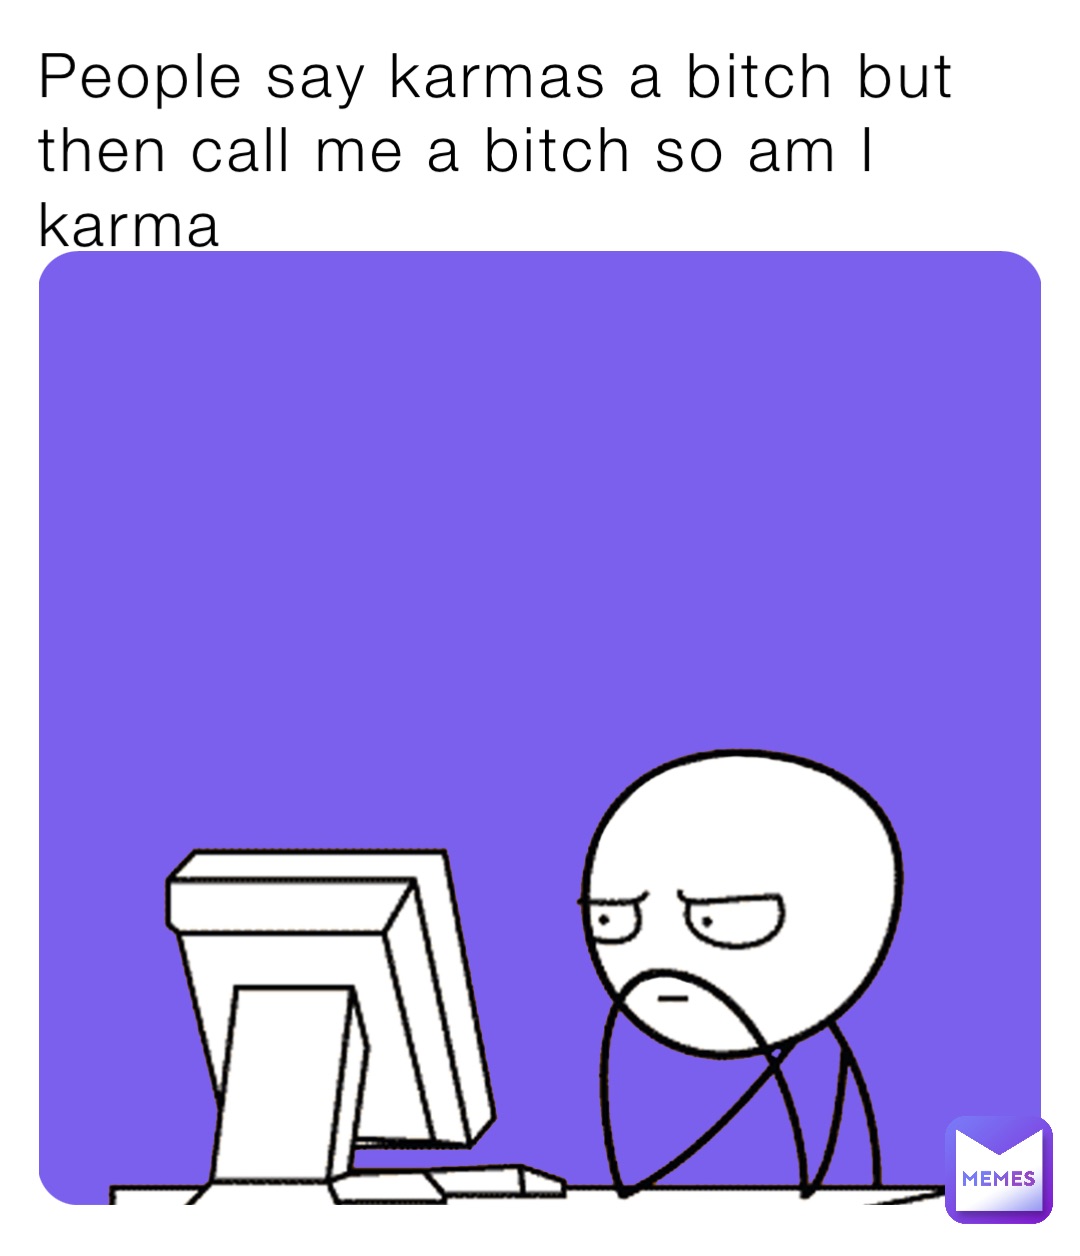 People say karmas a bitch but then call me a bitch so am I karma